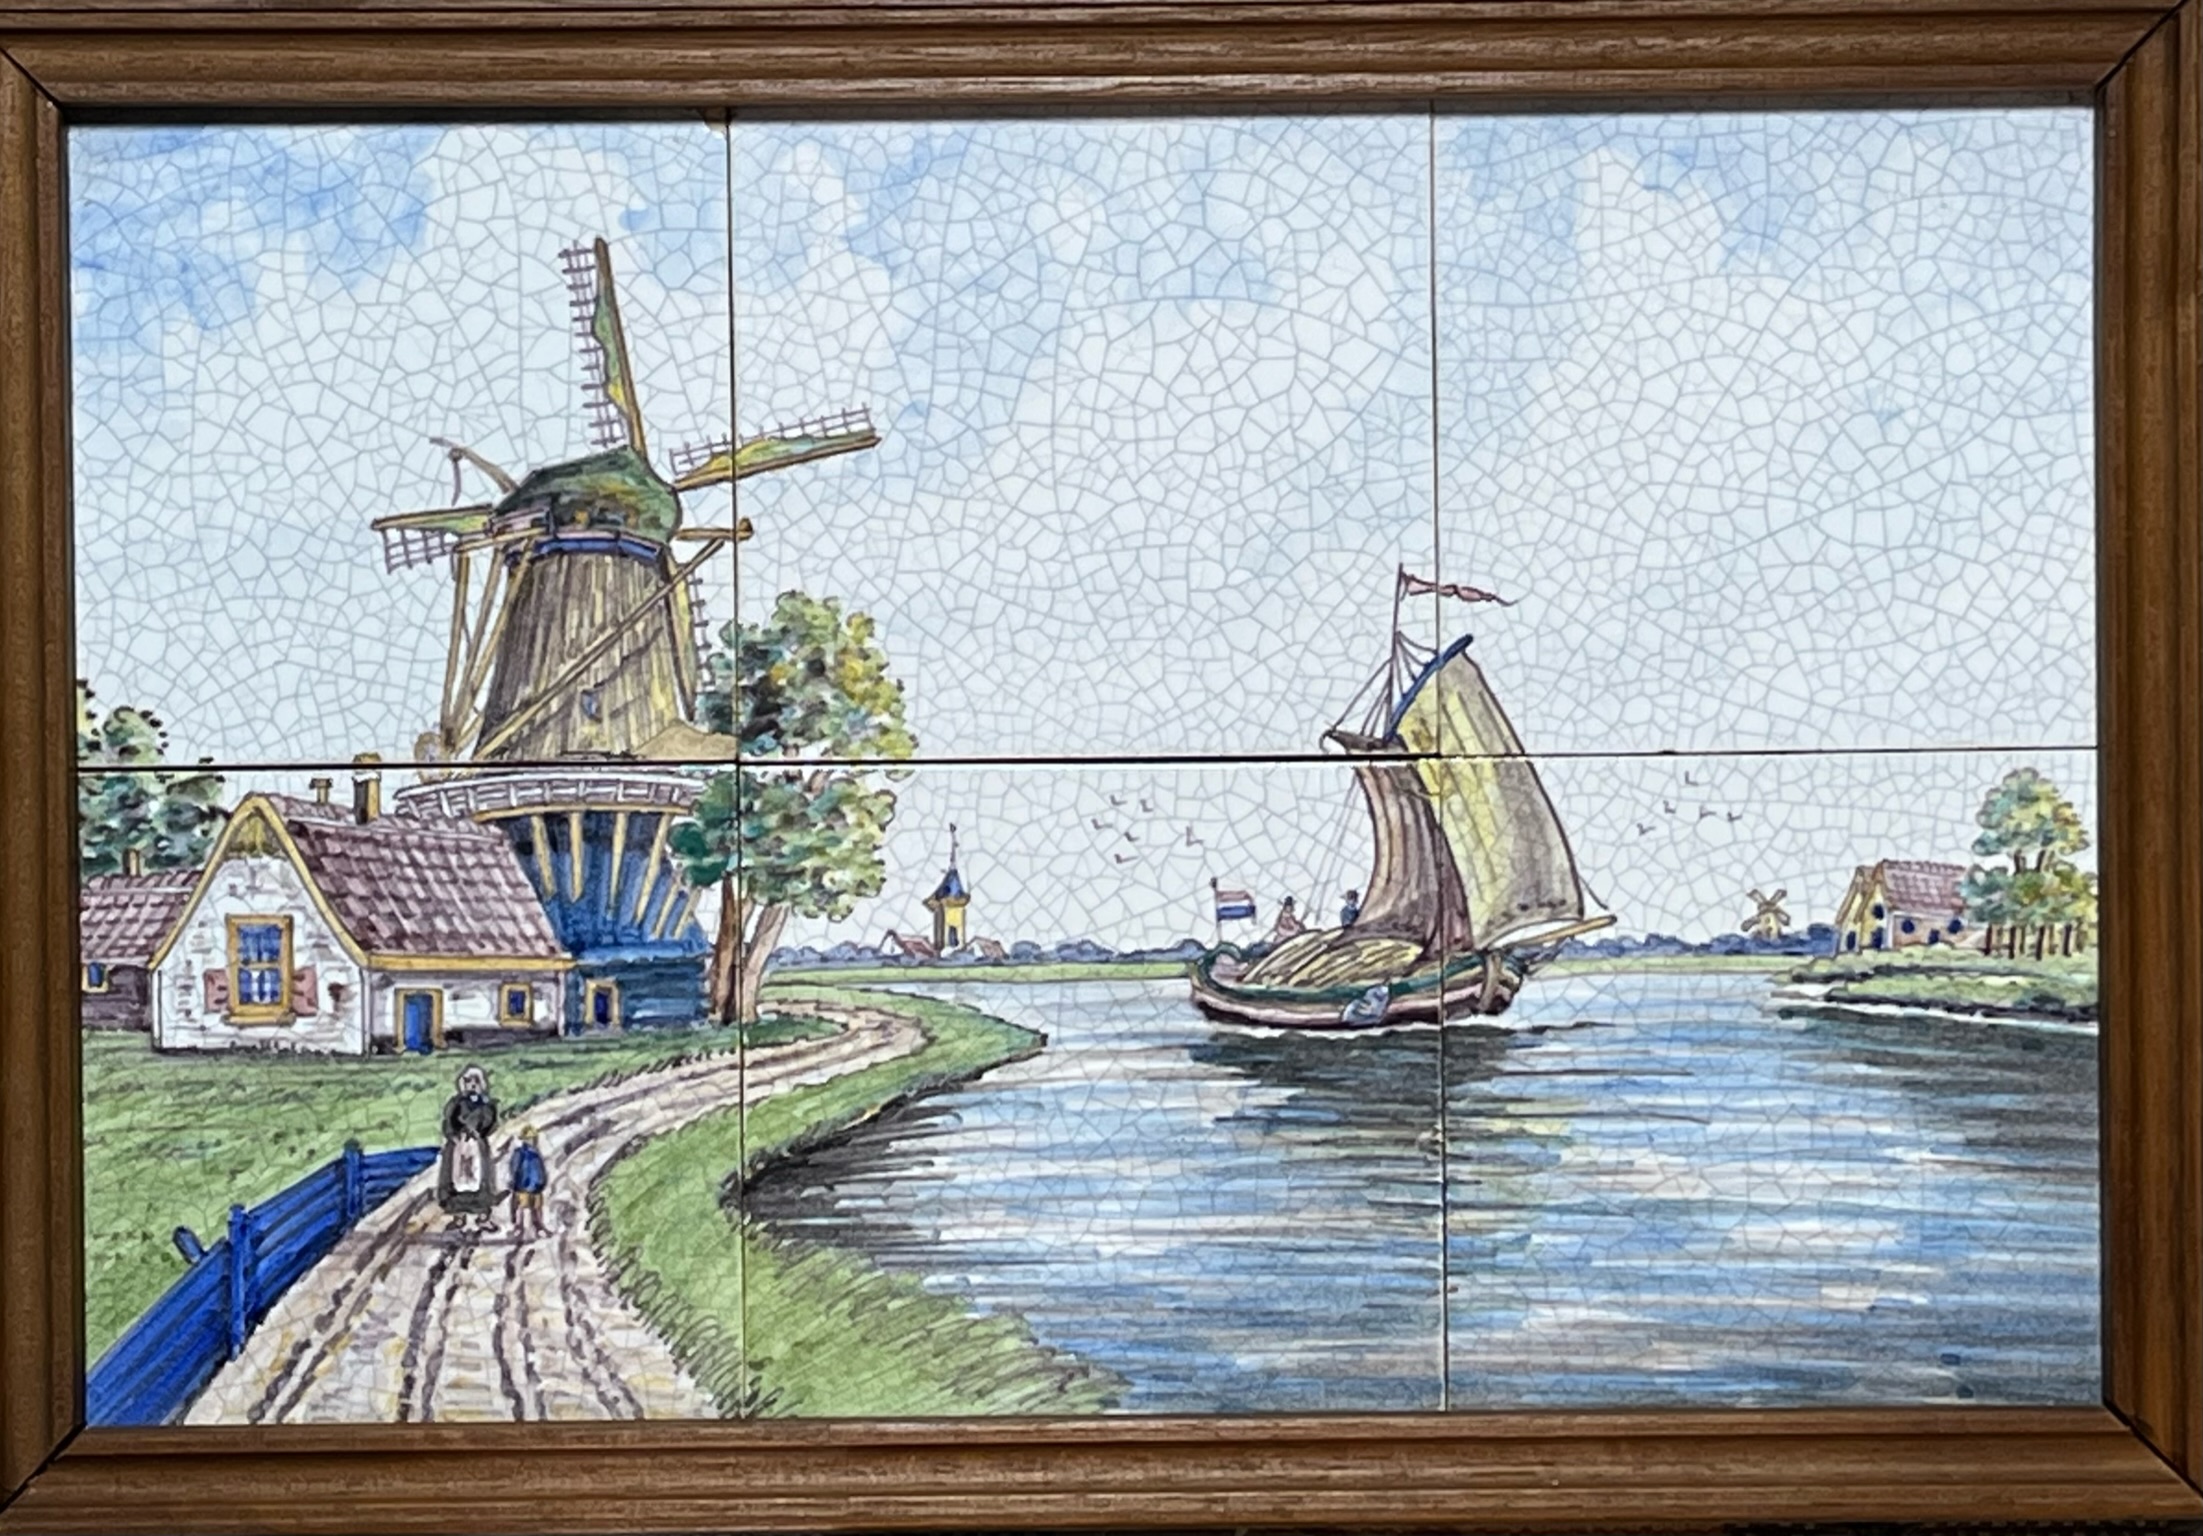 W-31 - Westraven: Murals - Windmill & Boat on 6 tiles